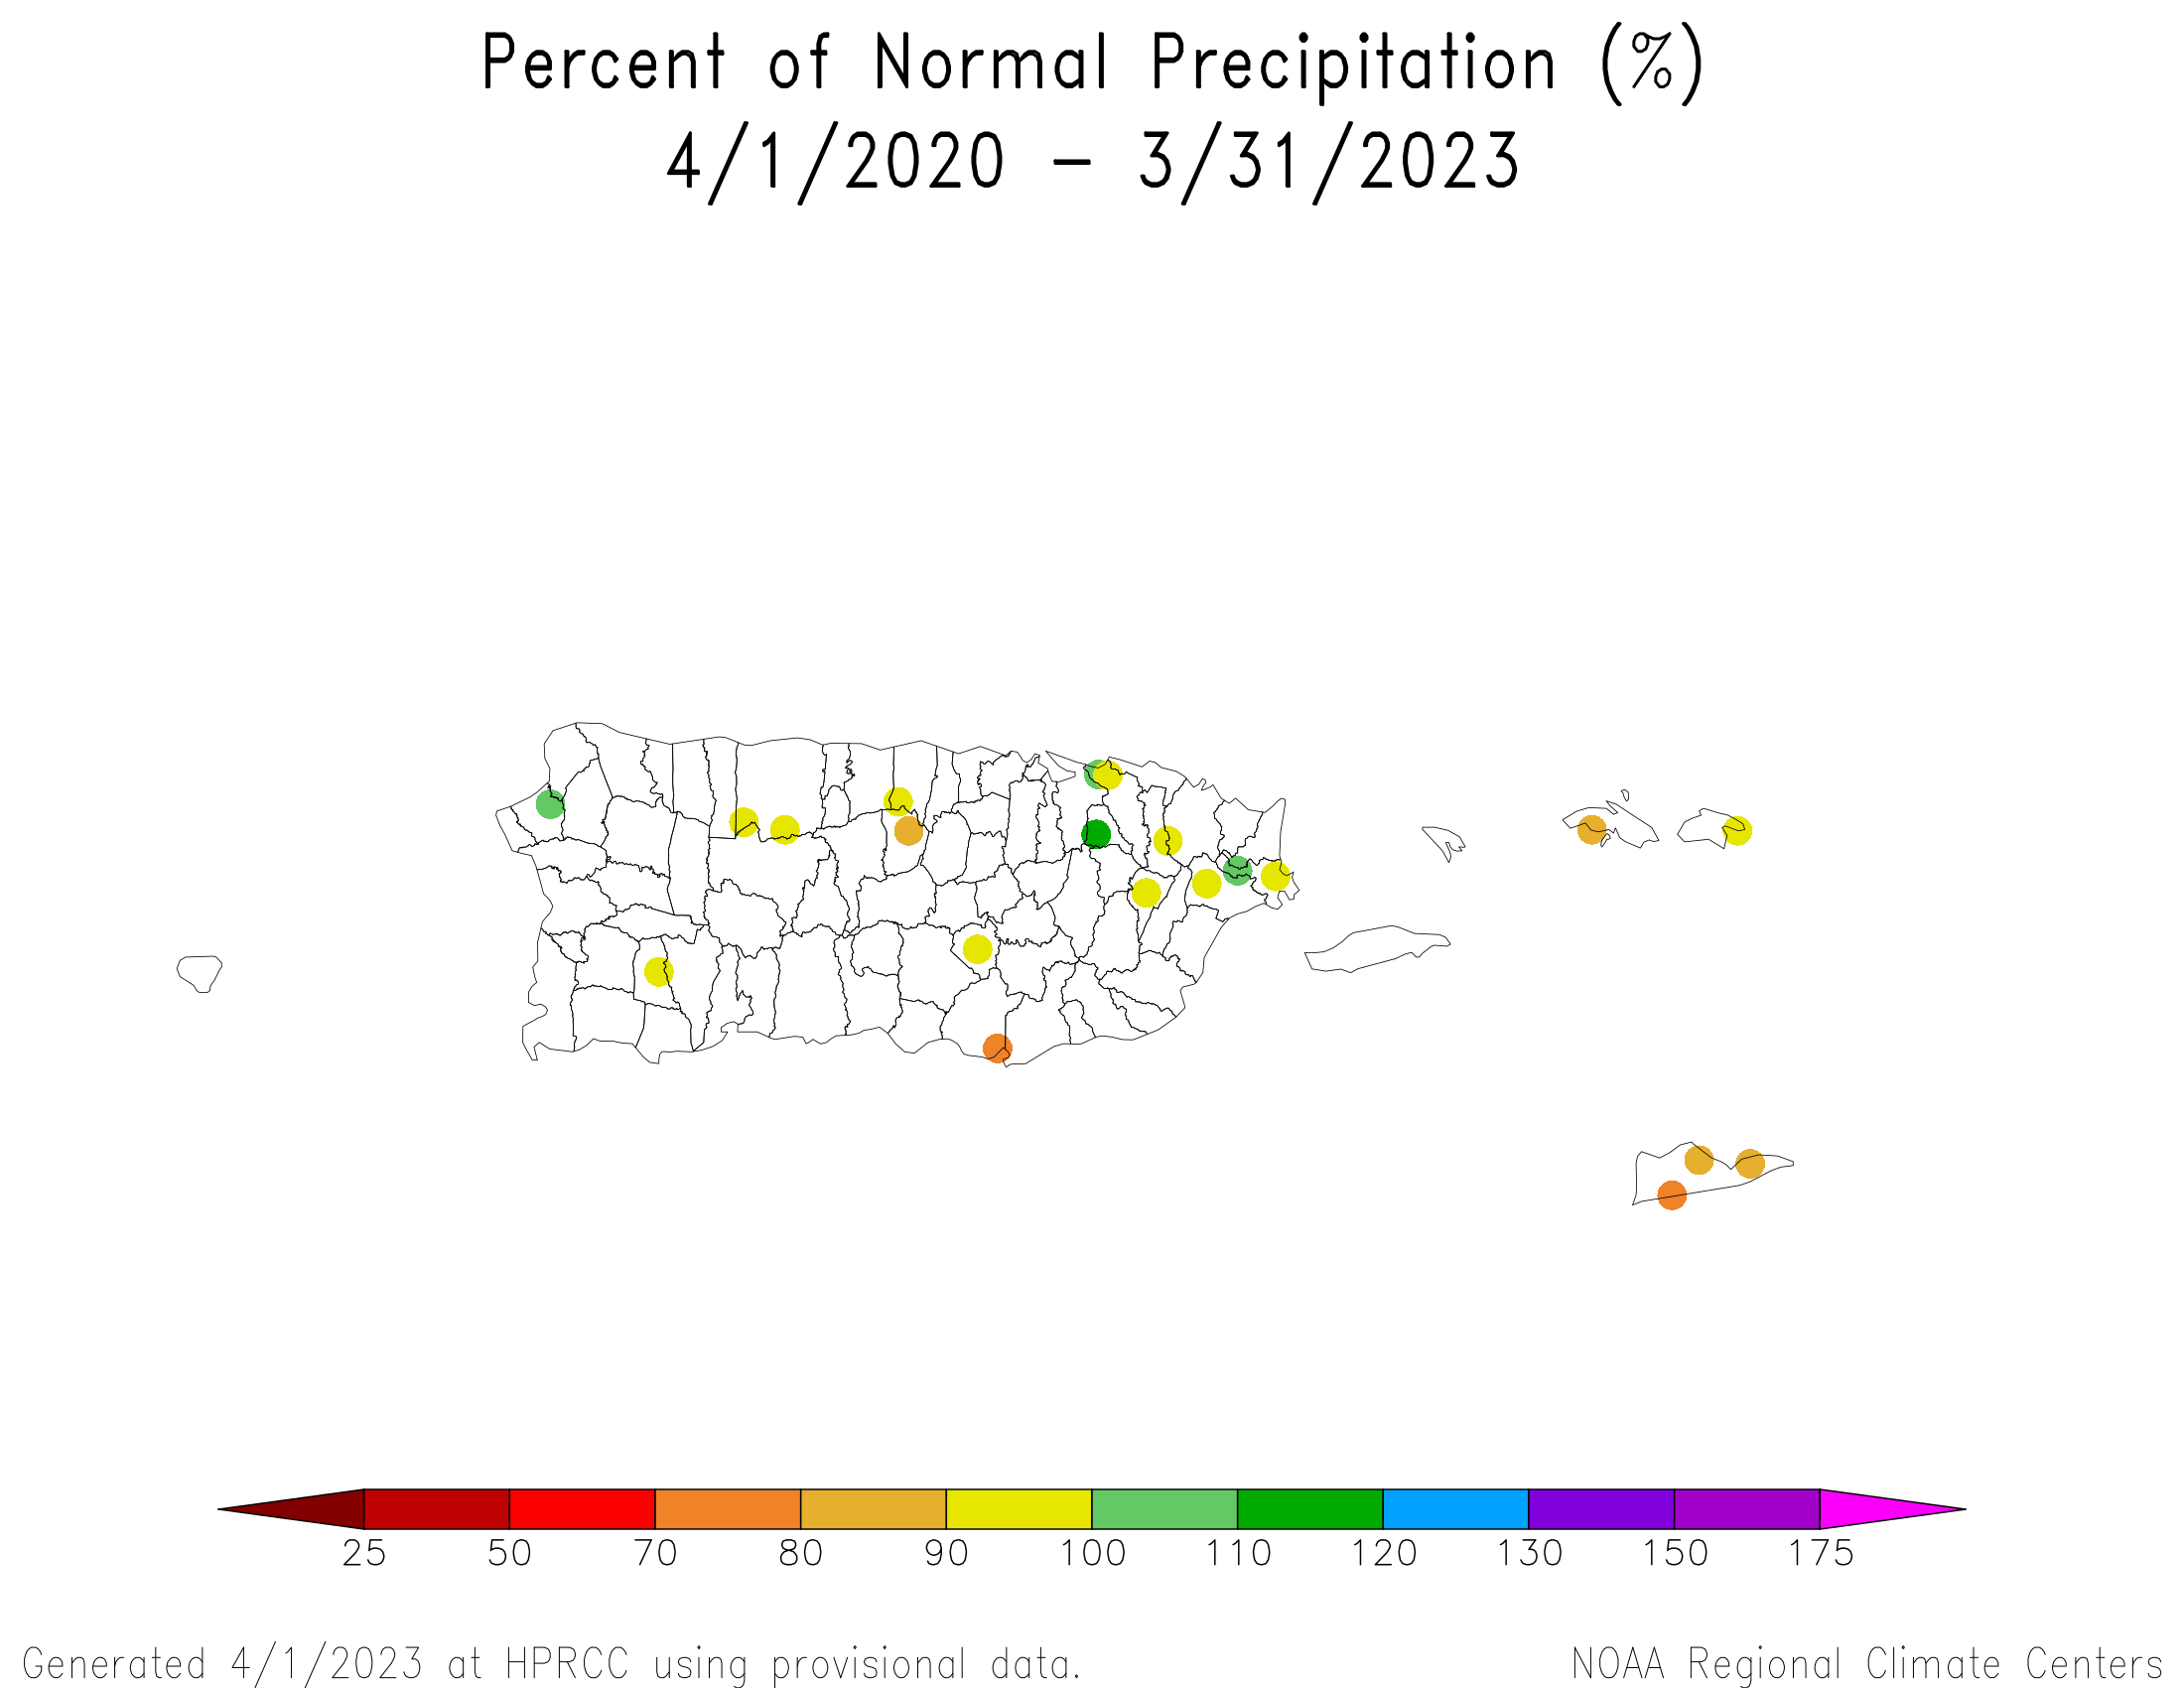 Puerto Rico and US Virgin Islands Percent of Normal Precipitation, April 2020-March 2023